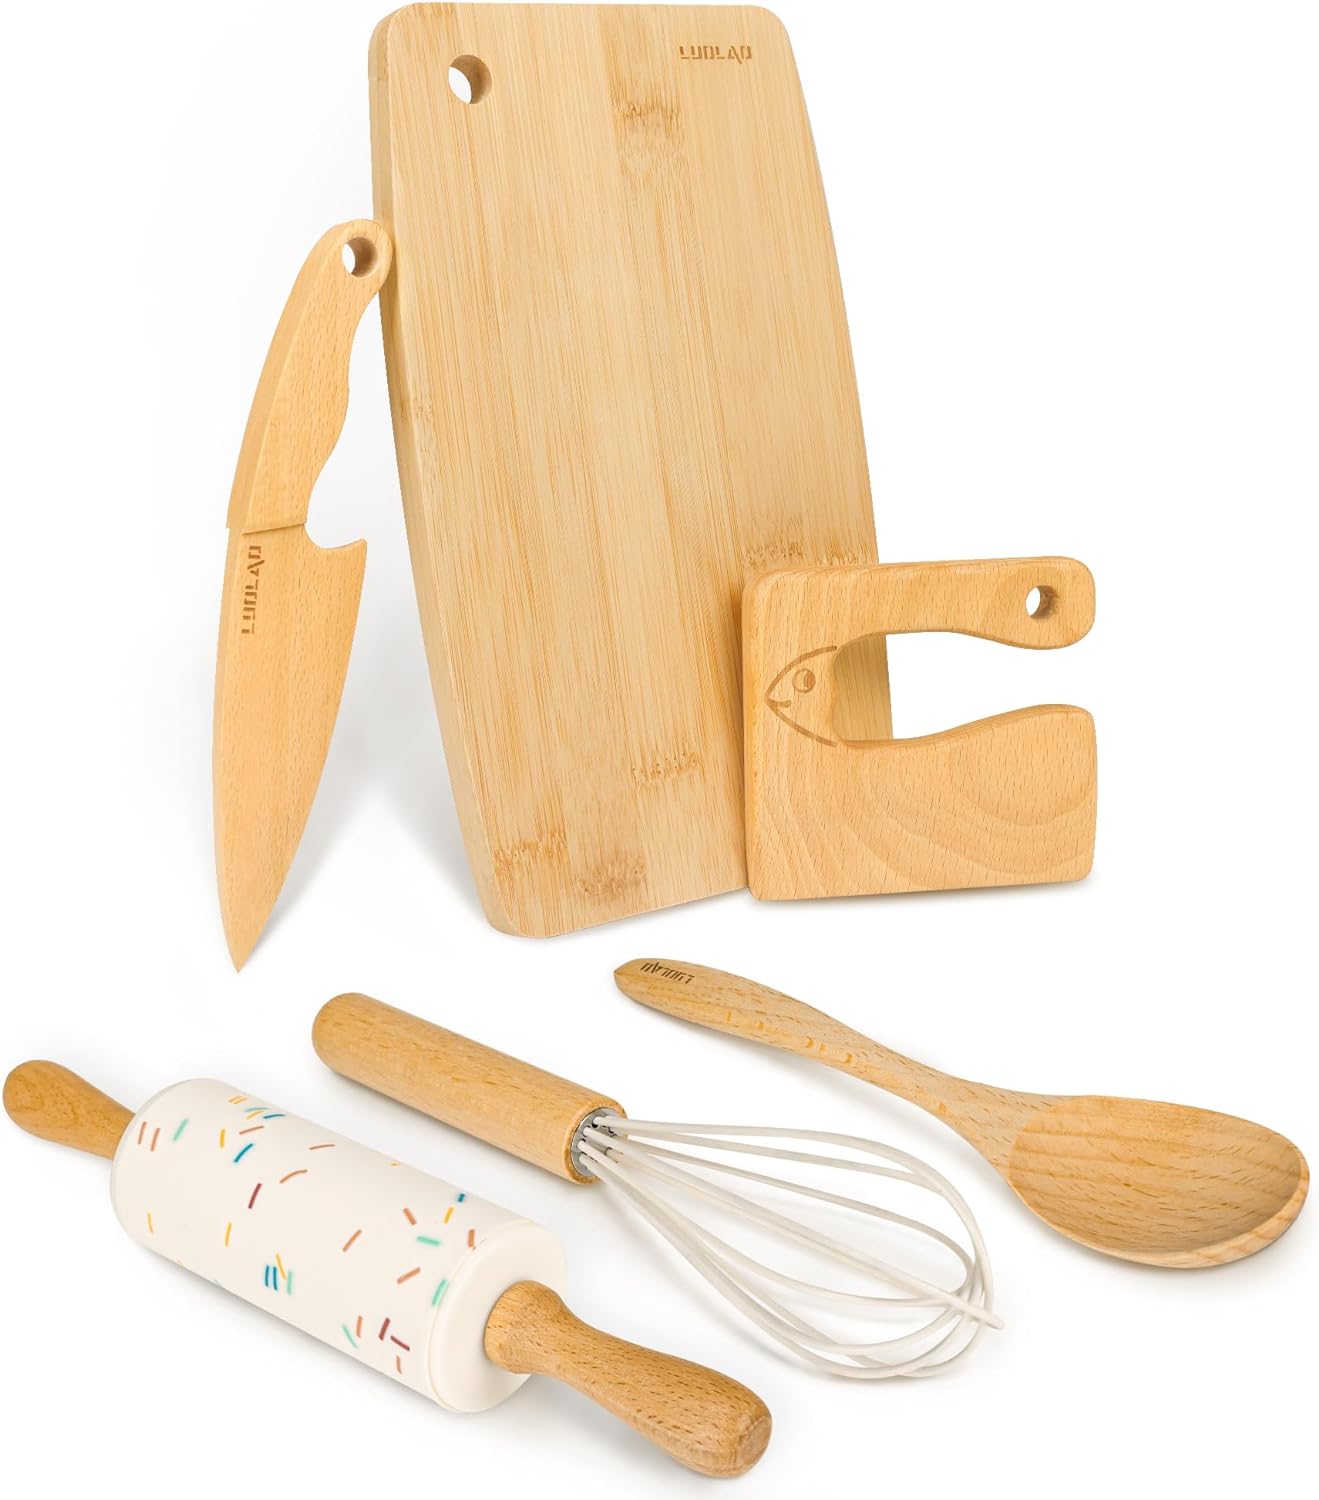 Wooden Baking Set for Kids Cooking